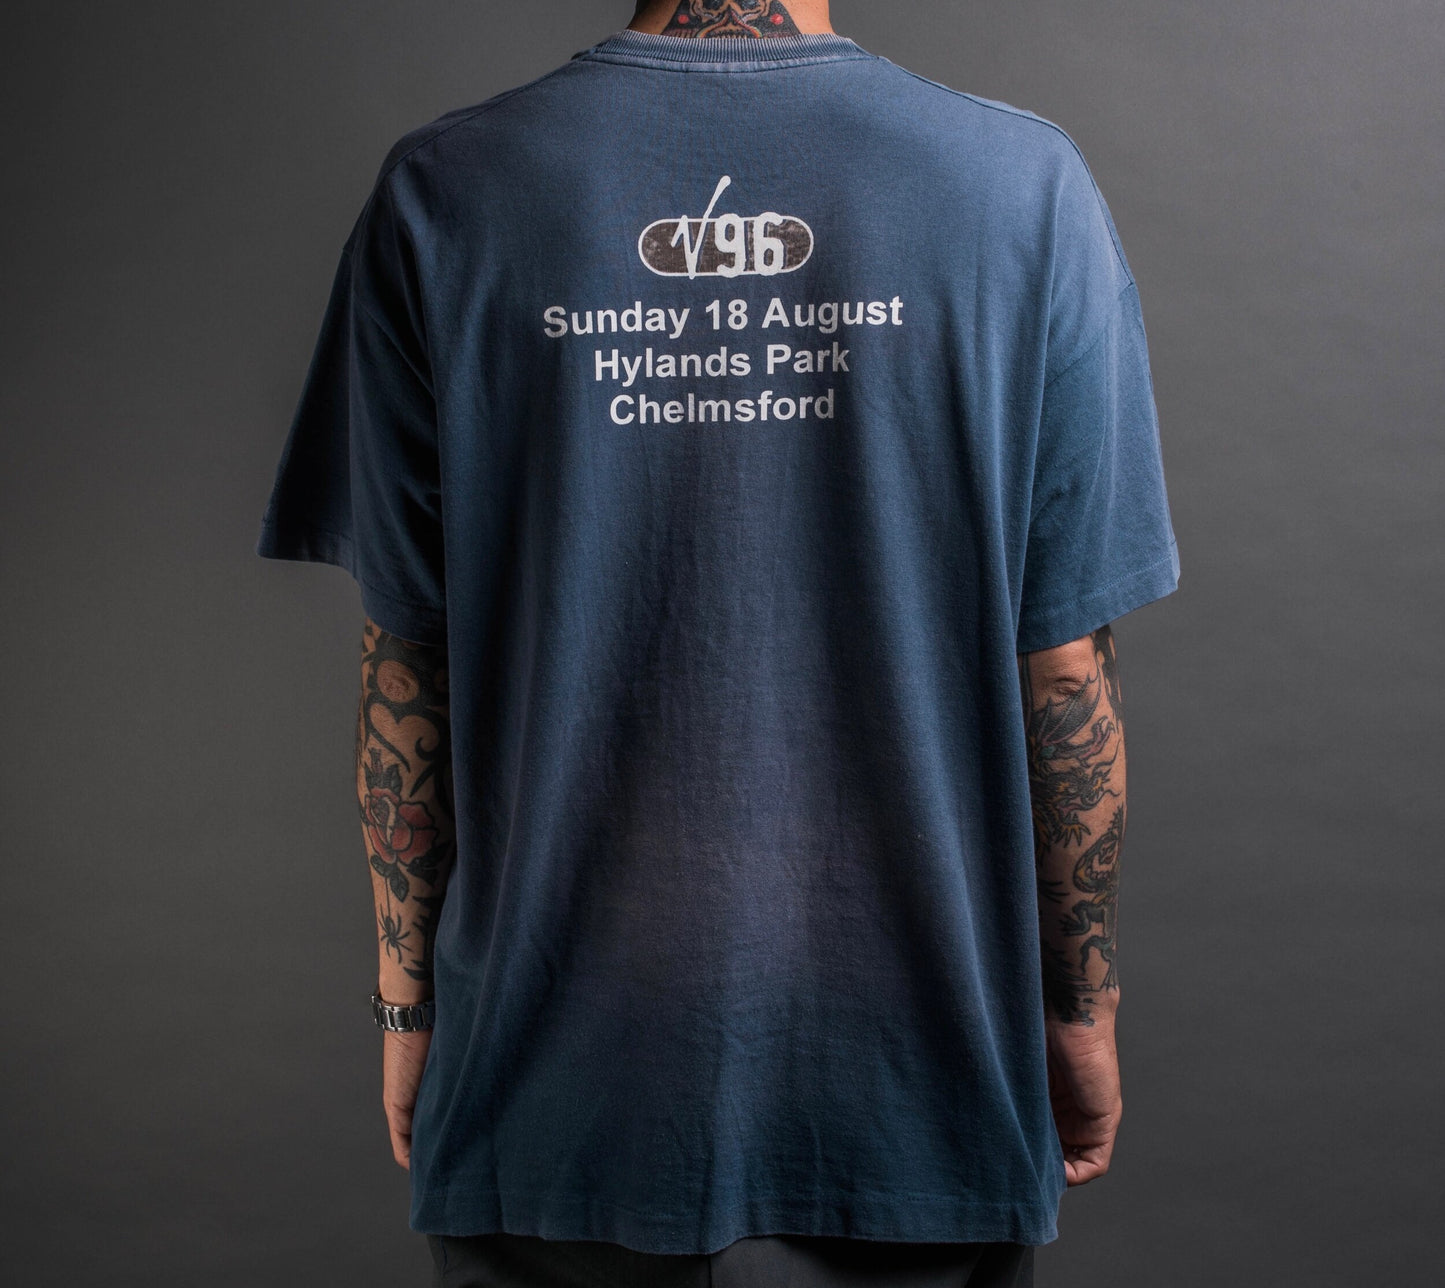 Vintage 1996 V96 Festival T-Shirt